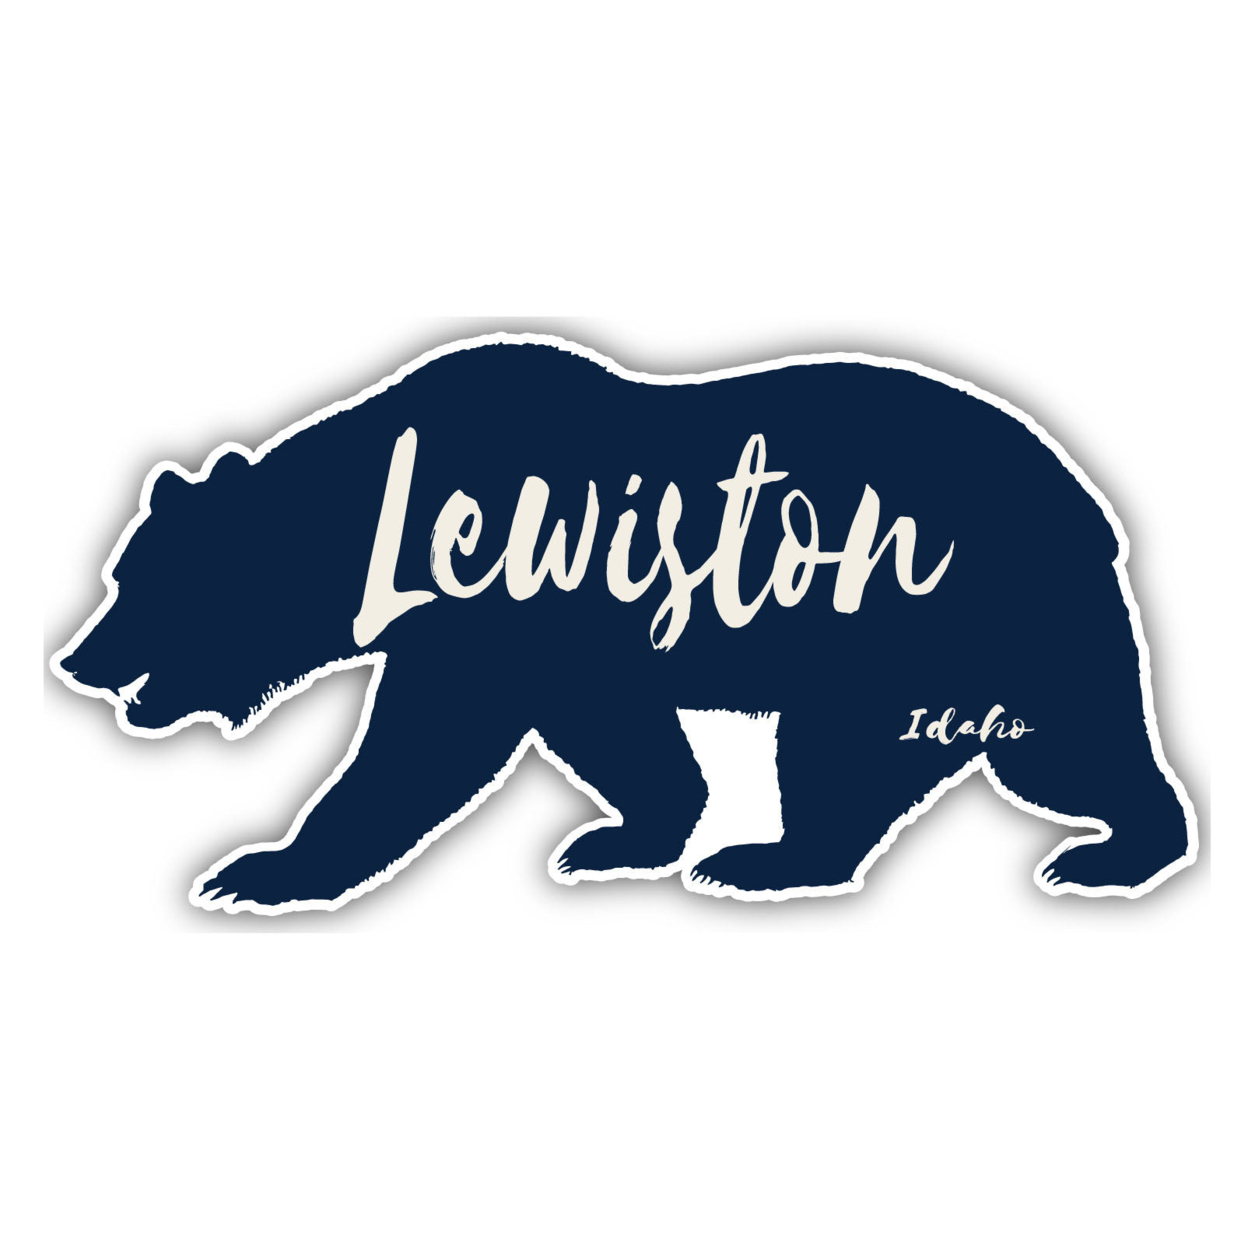 Lewiston Idaho Souvenir Decorative Stickers (Choose Theme And Size) - 4-Inch, Bear